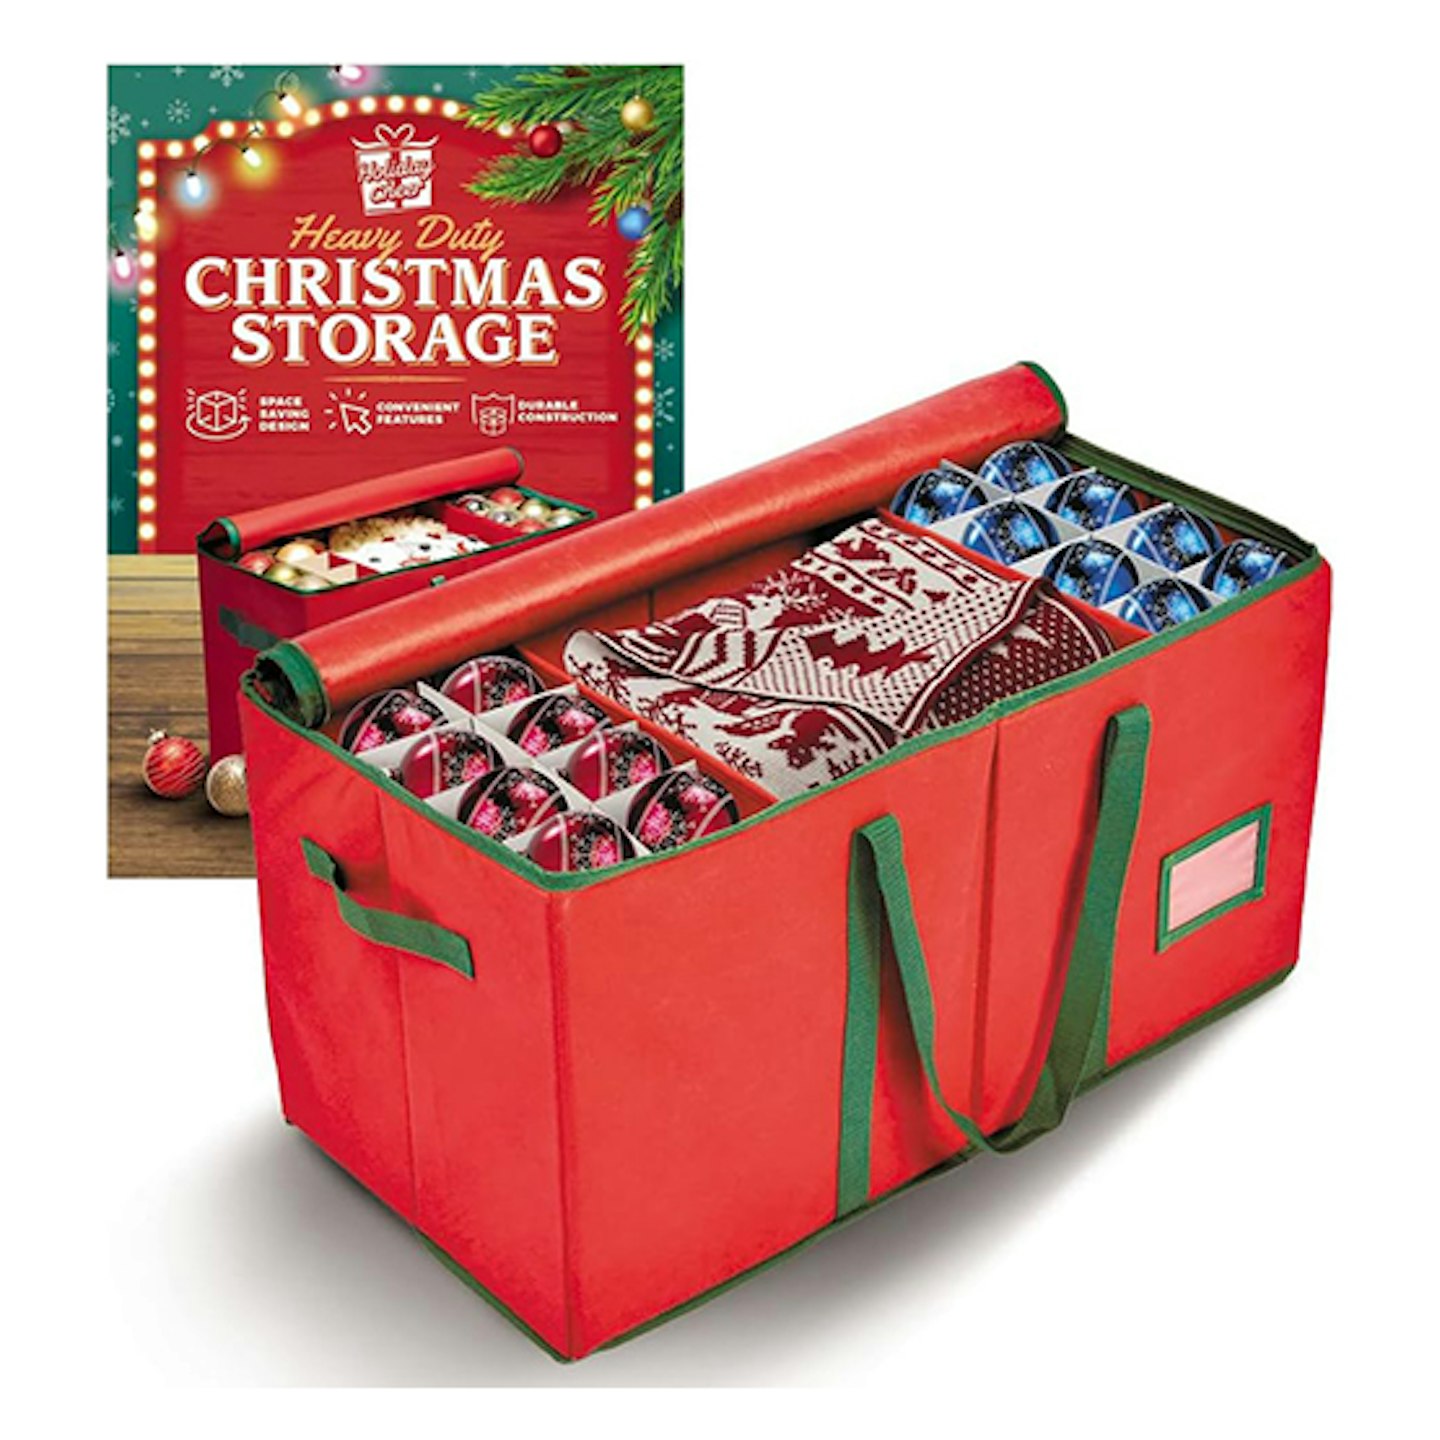 Christmas storage box